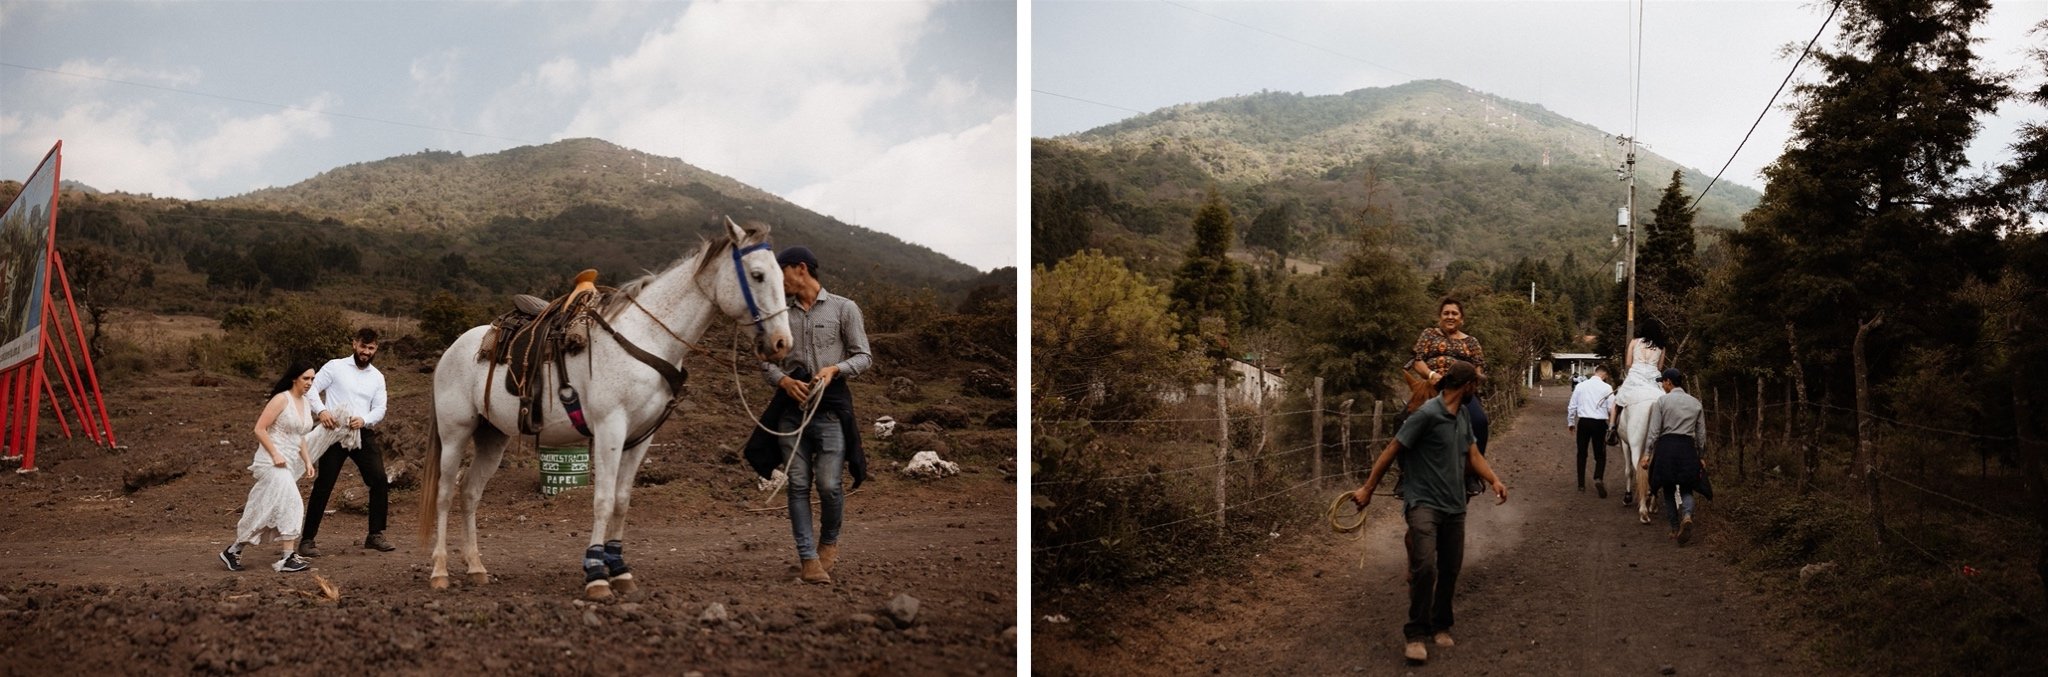 31_Four-Day Guatemala Adventure Elopement - Will Khoury Elopement Photographer.jpg